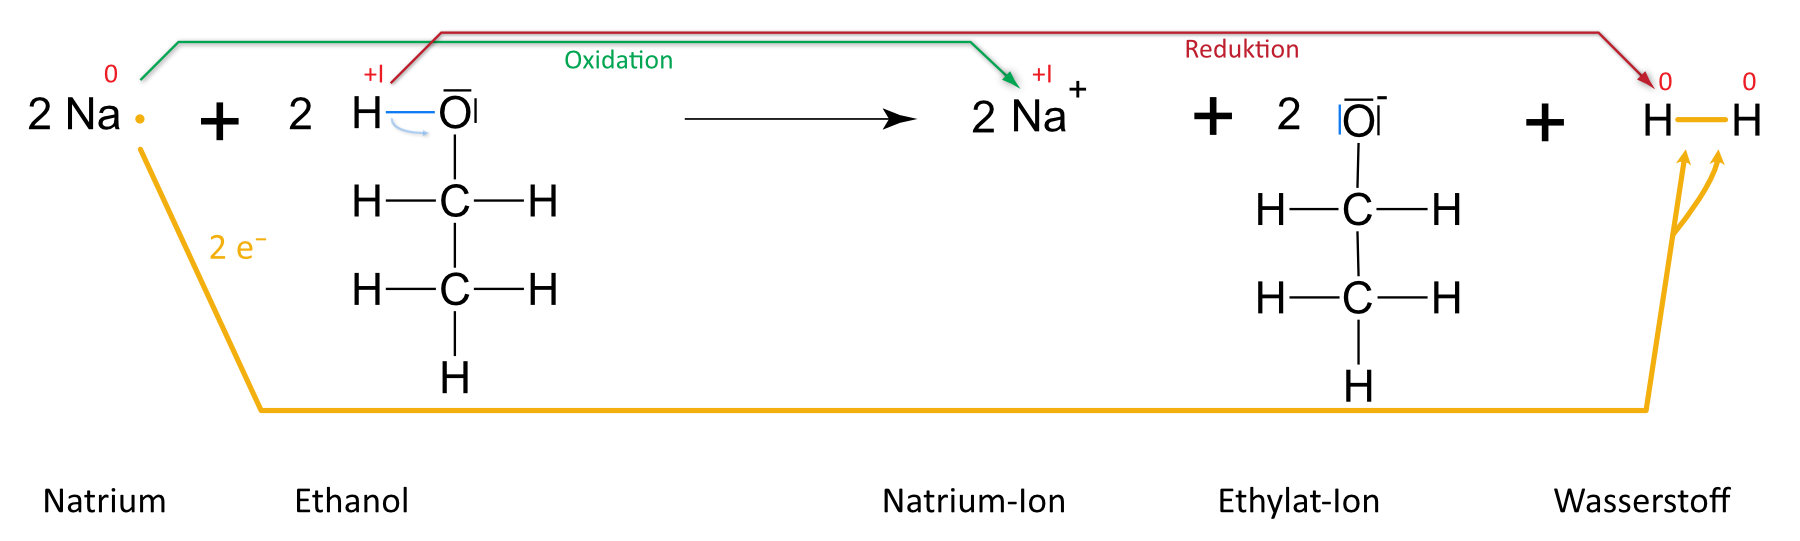 05 01 04 ta Reaktionsgleichung Natrium und Ethanol